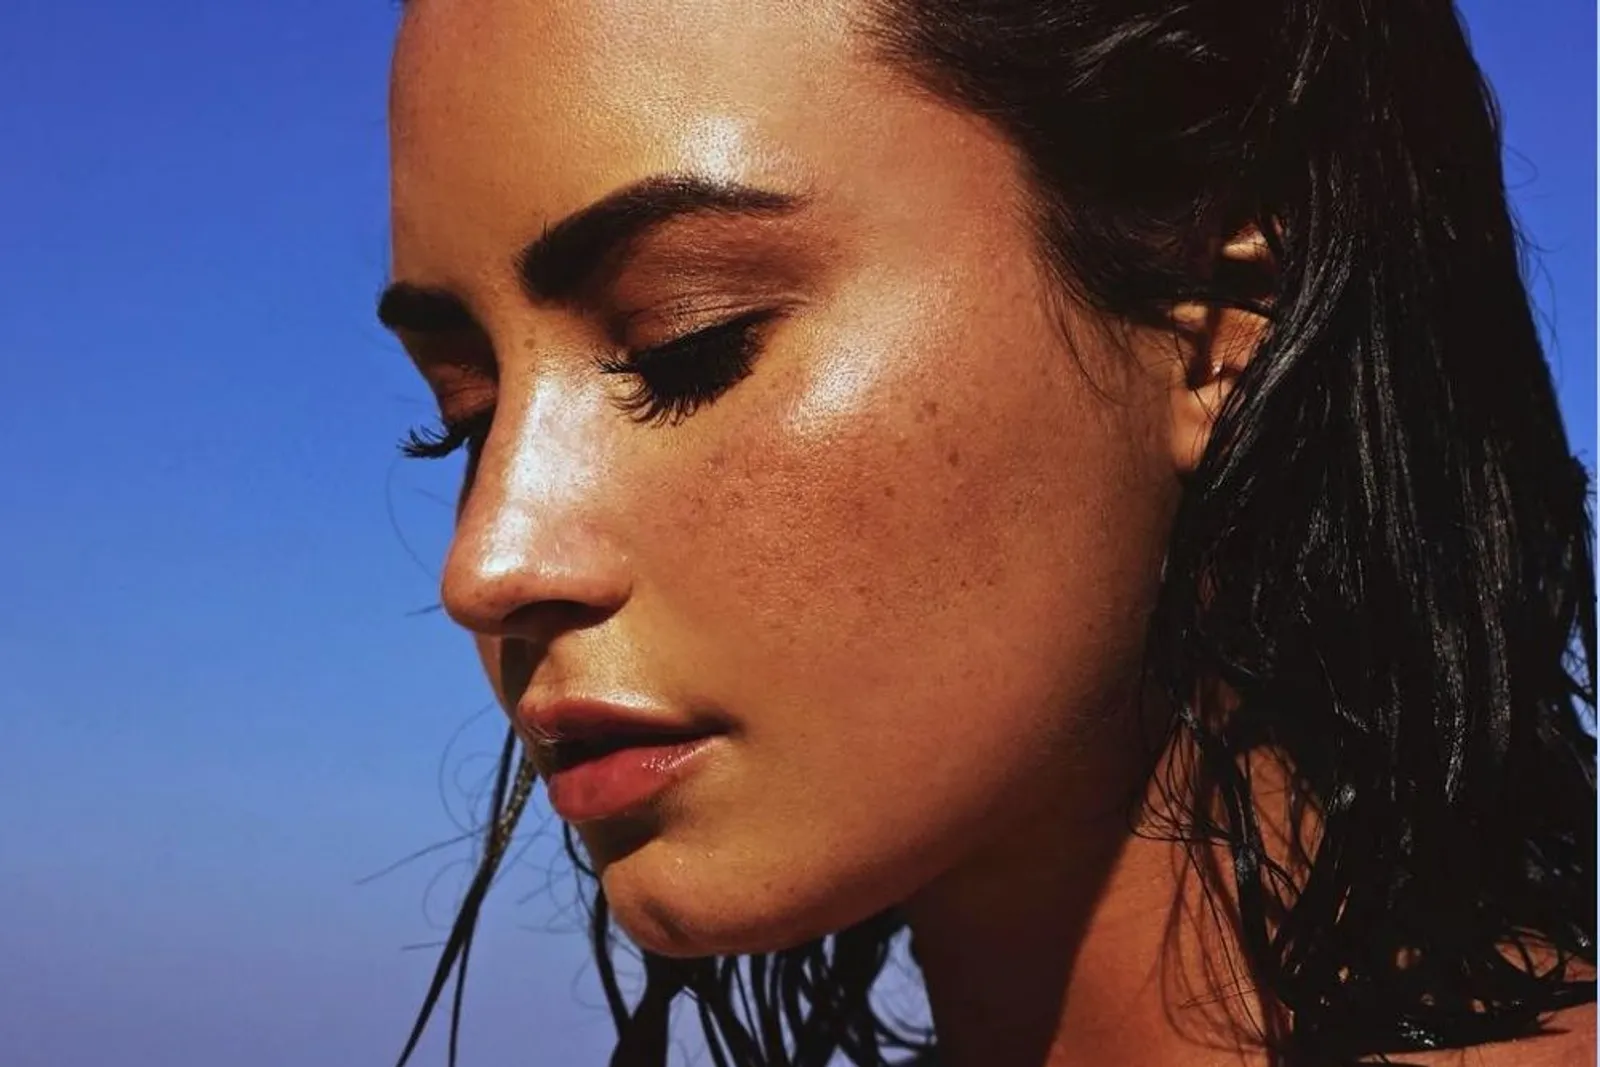 Usai Selamat dari Overdosis, Demi Lovato: “I’m So Blessed”